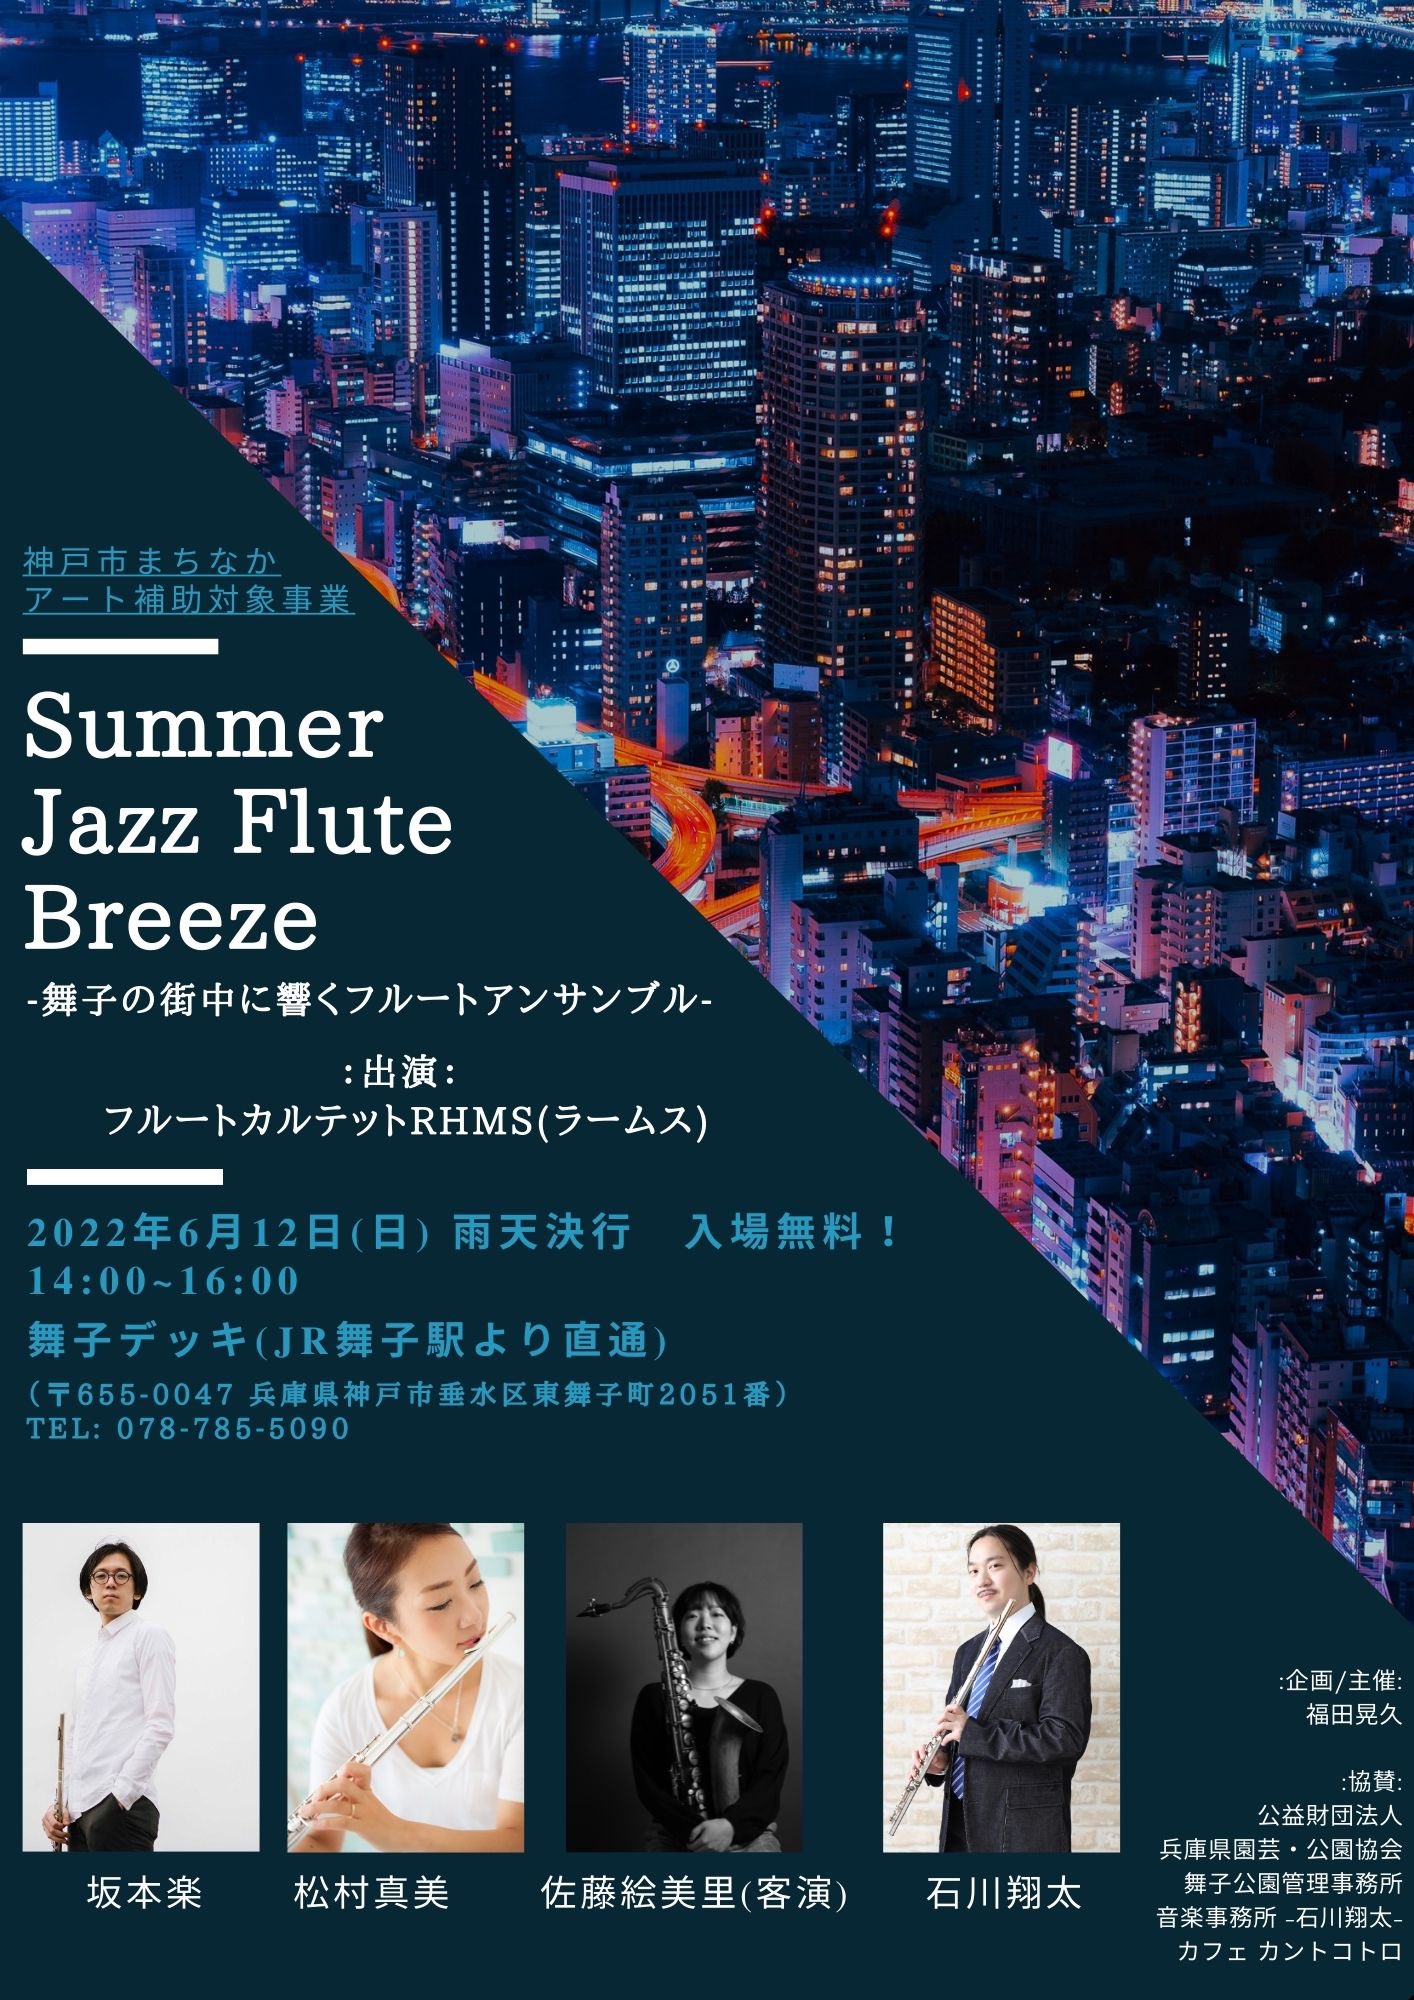 Summer Jazz Flute Breeze ——舞子の街中に響くフルートアンサンブル——